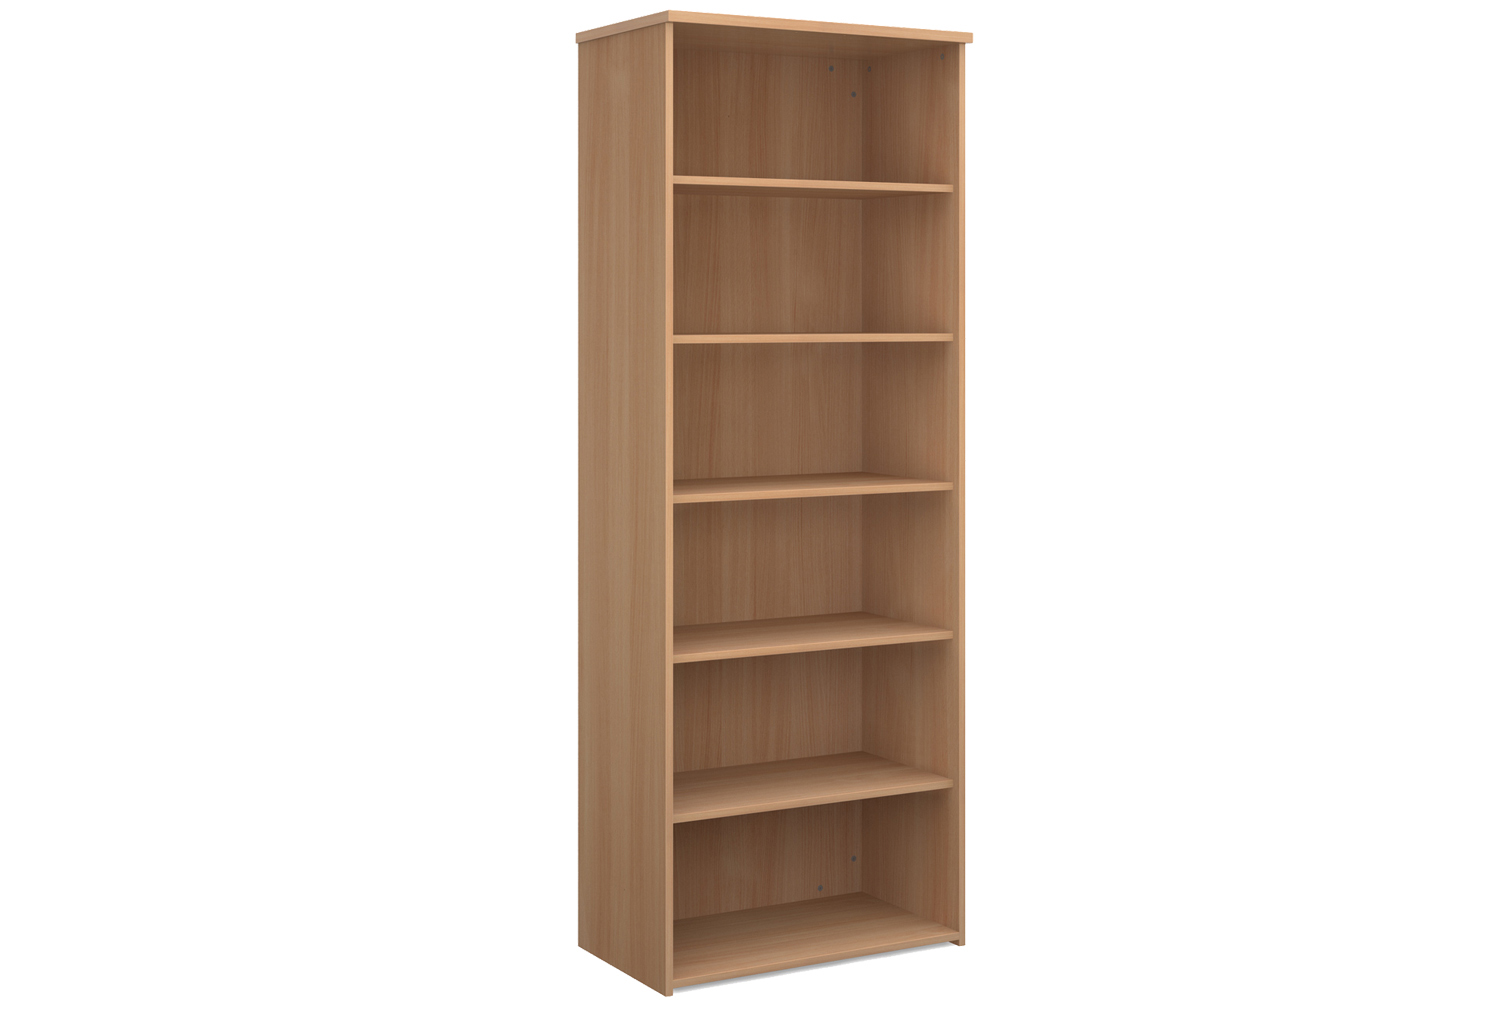 Value Line Office Bookcases, 5 Shelf - 80wx47dx214h (cm), Beech